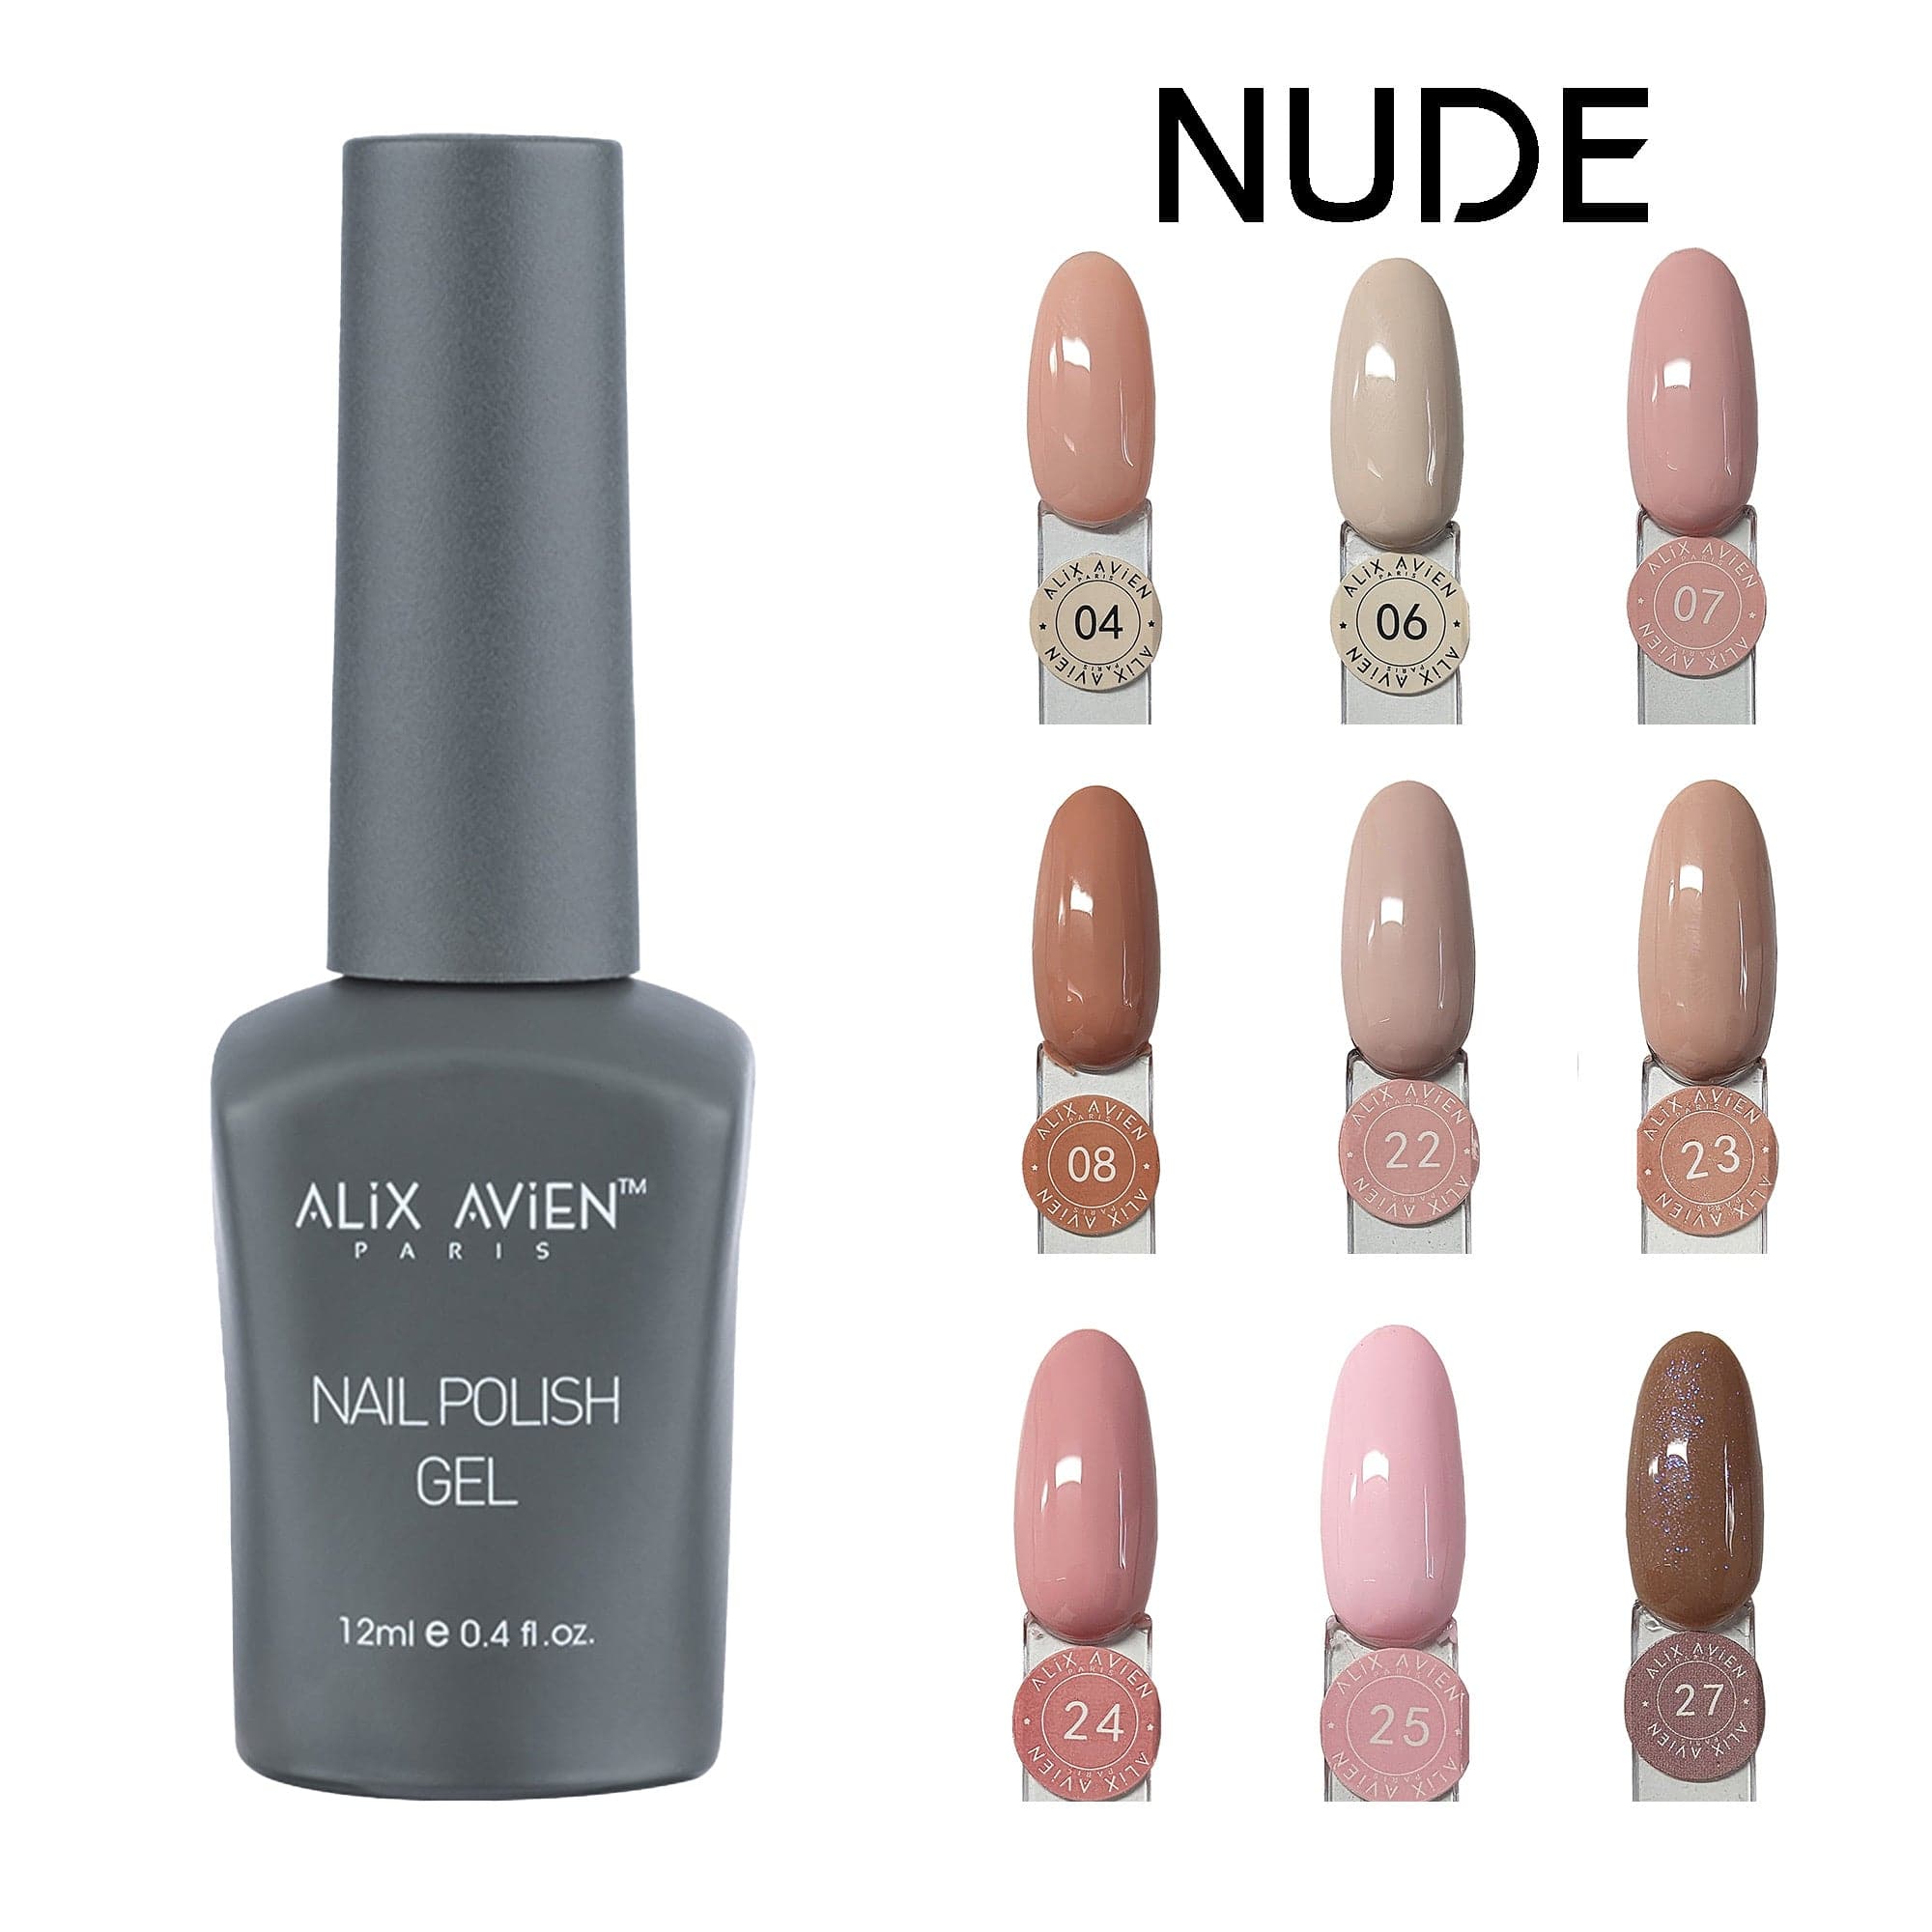 Alix Avien - Nail Polish Gel No.08 (Nude) - Eson Direct